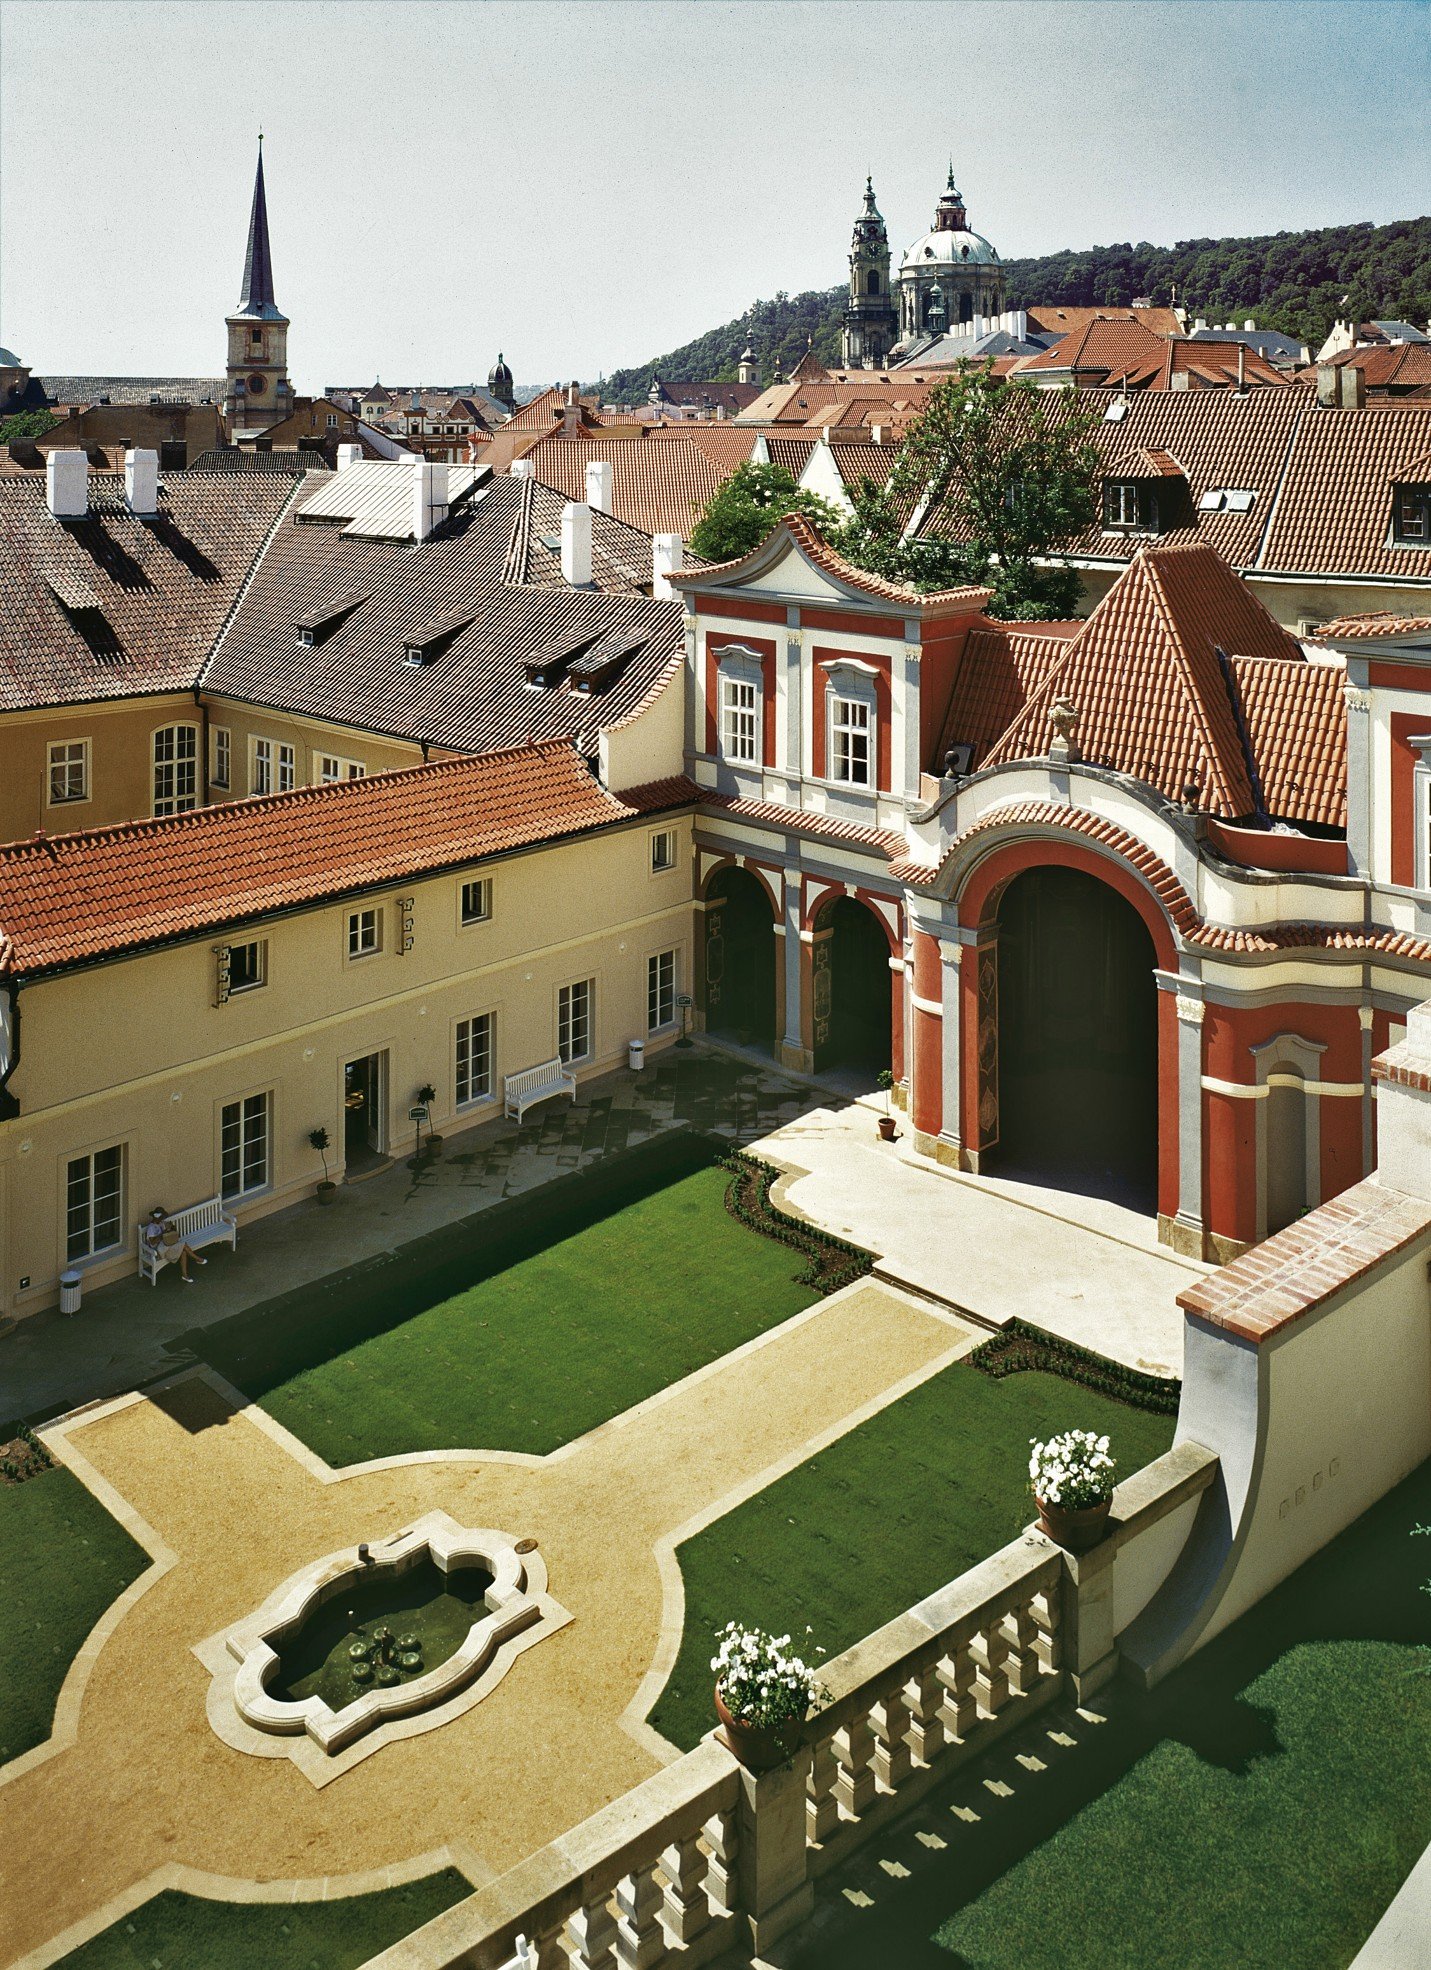 The Palace Gardens below Prague Castle